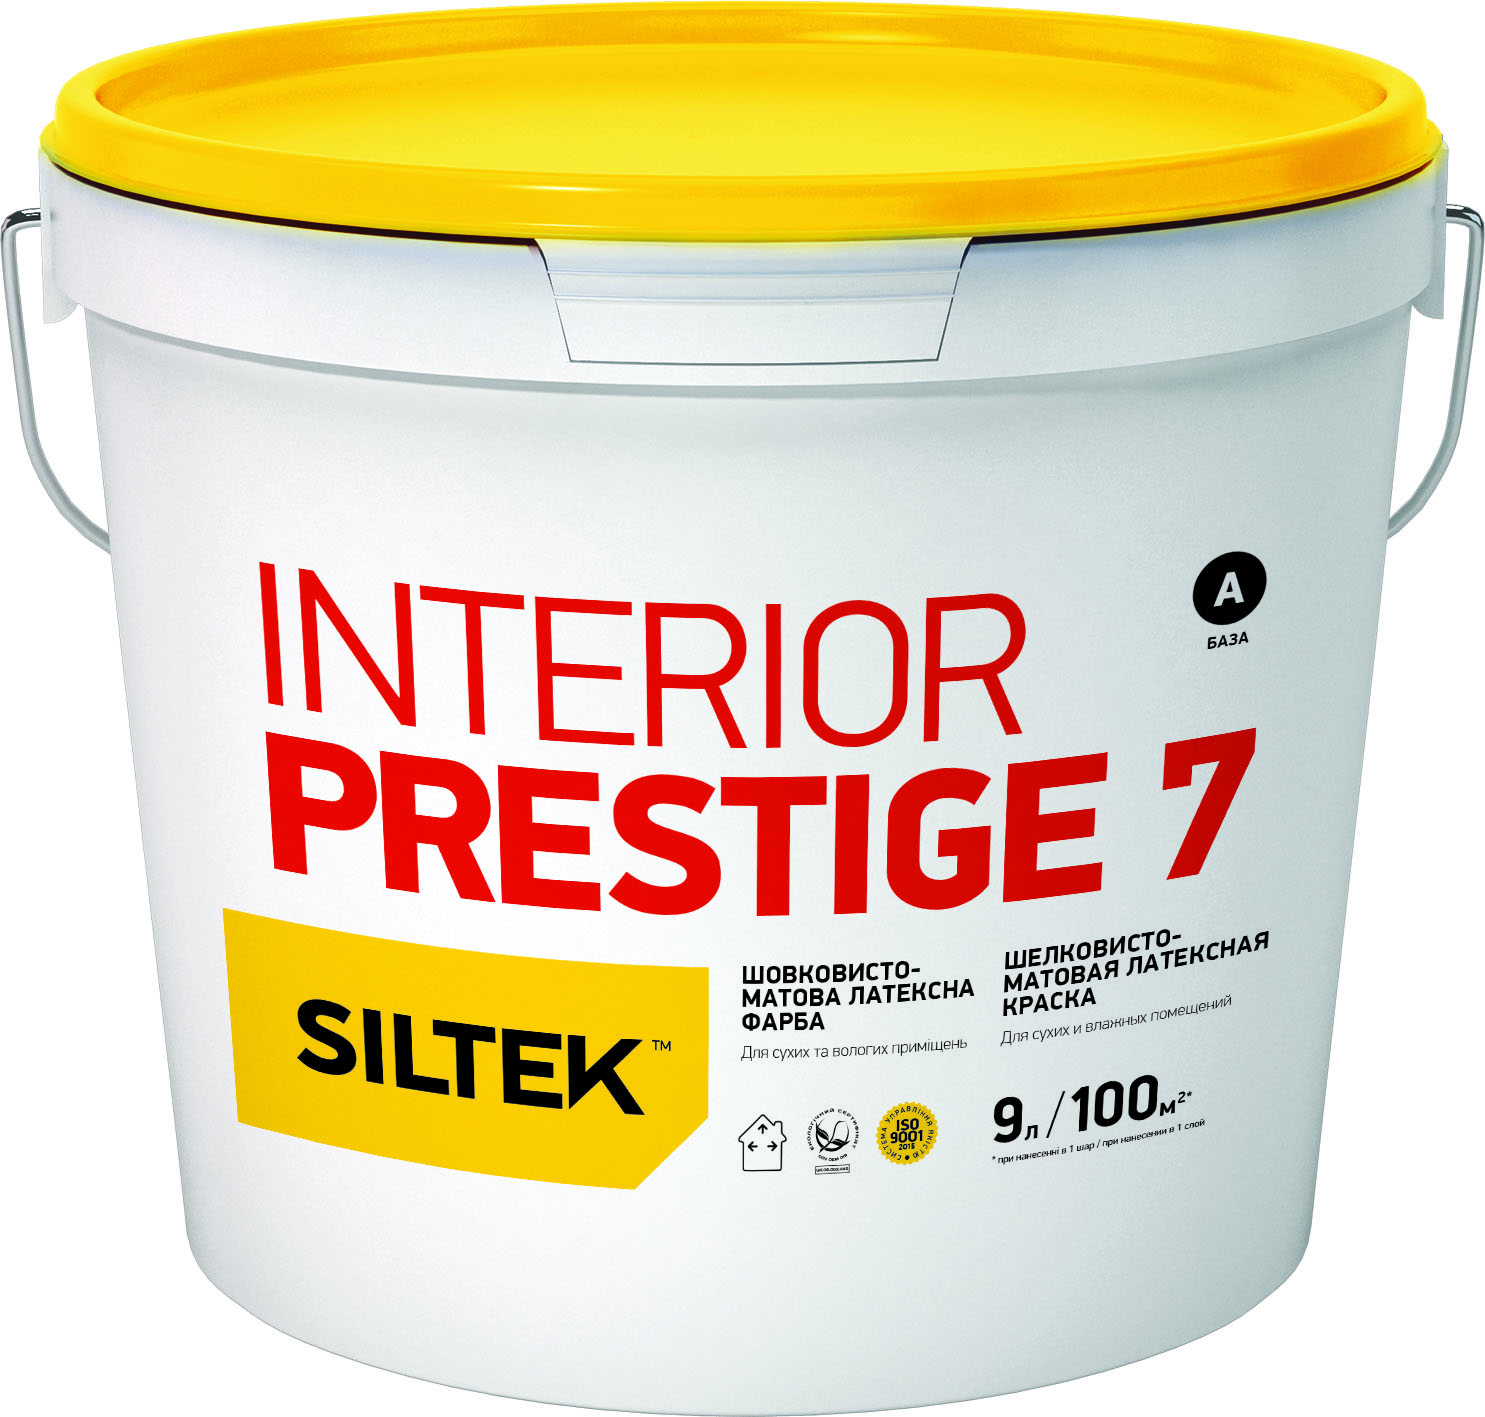 SILTEK Interior Prestige 7